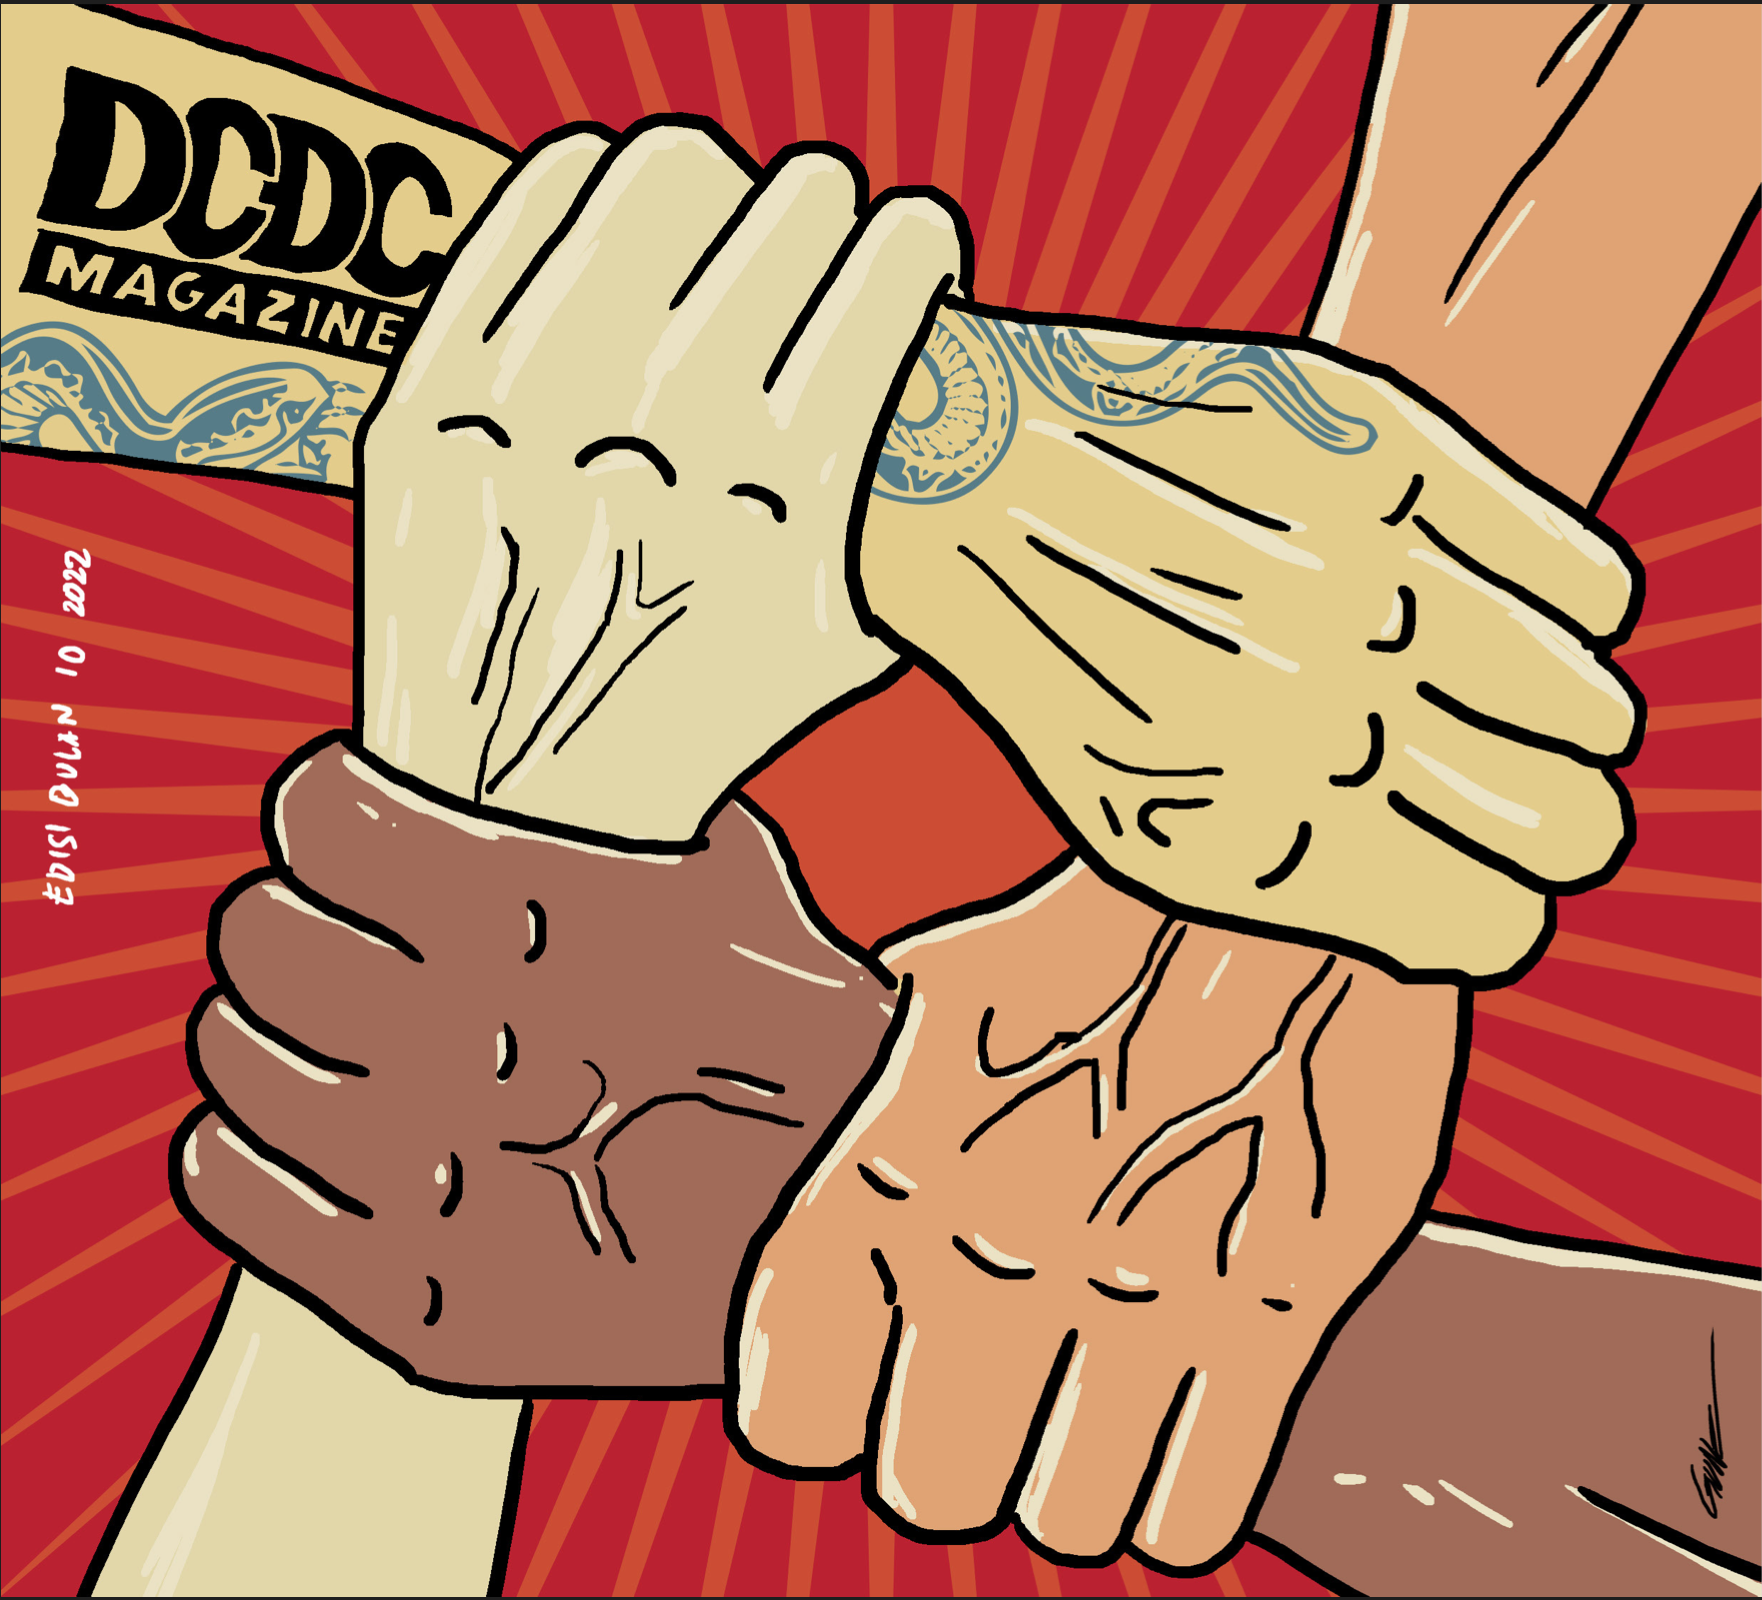 DCDC MAGAZINE #11 - Oktober 2022